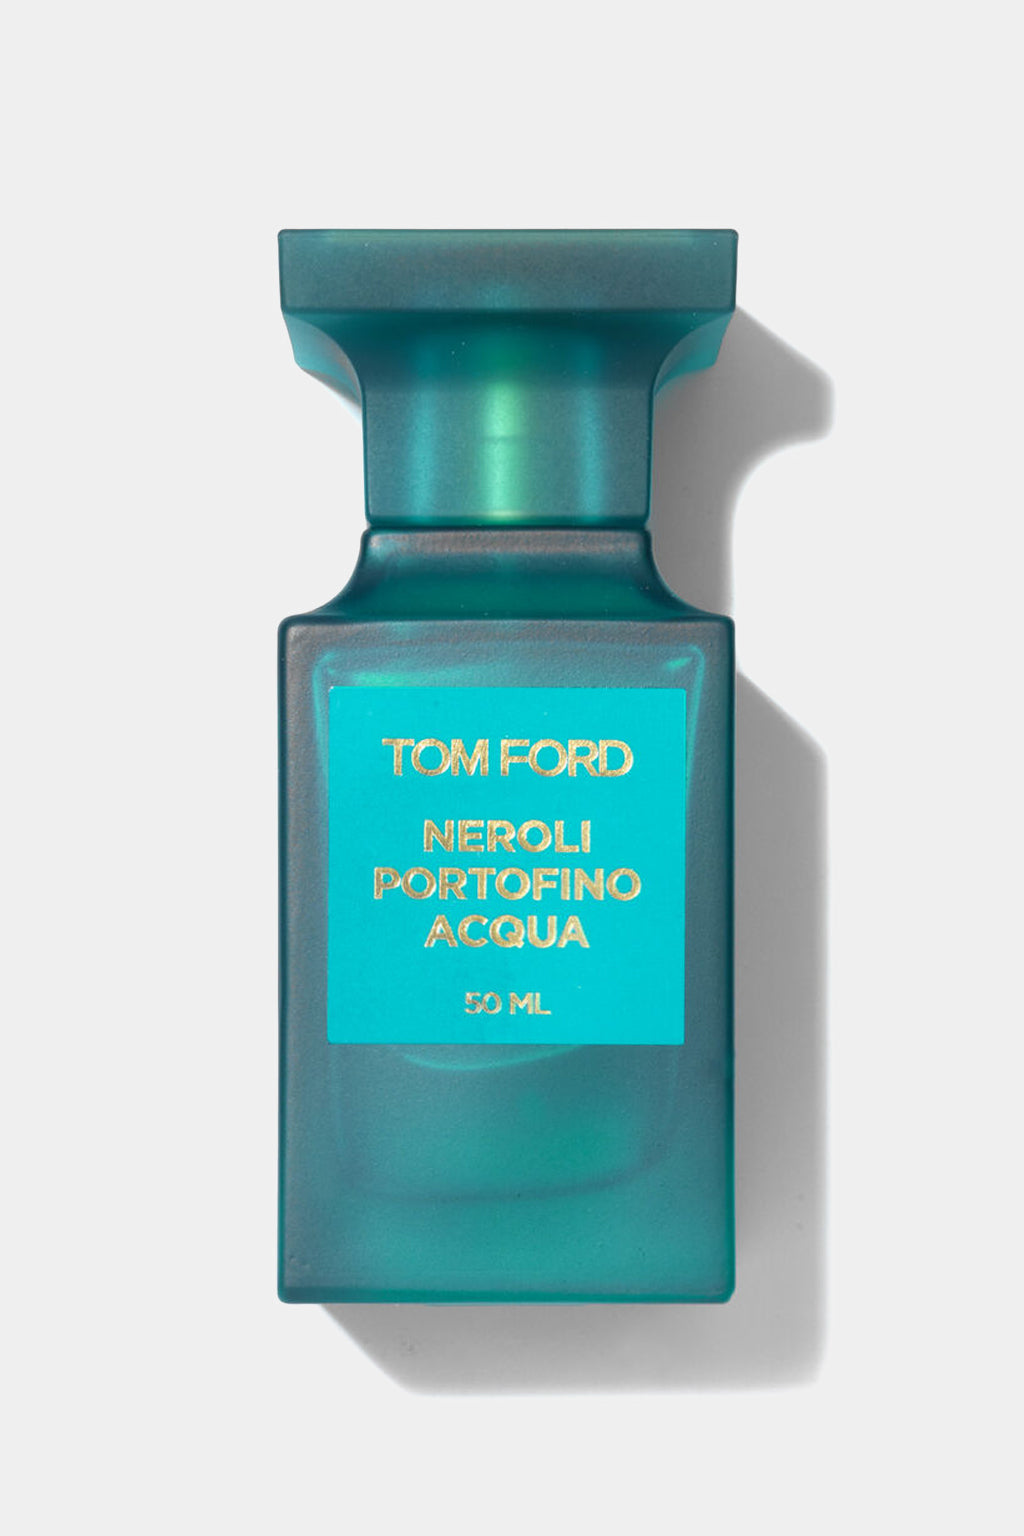 Tom Ford - Neroli Portofino Acqua Eau de Toilette